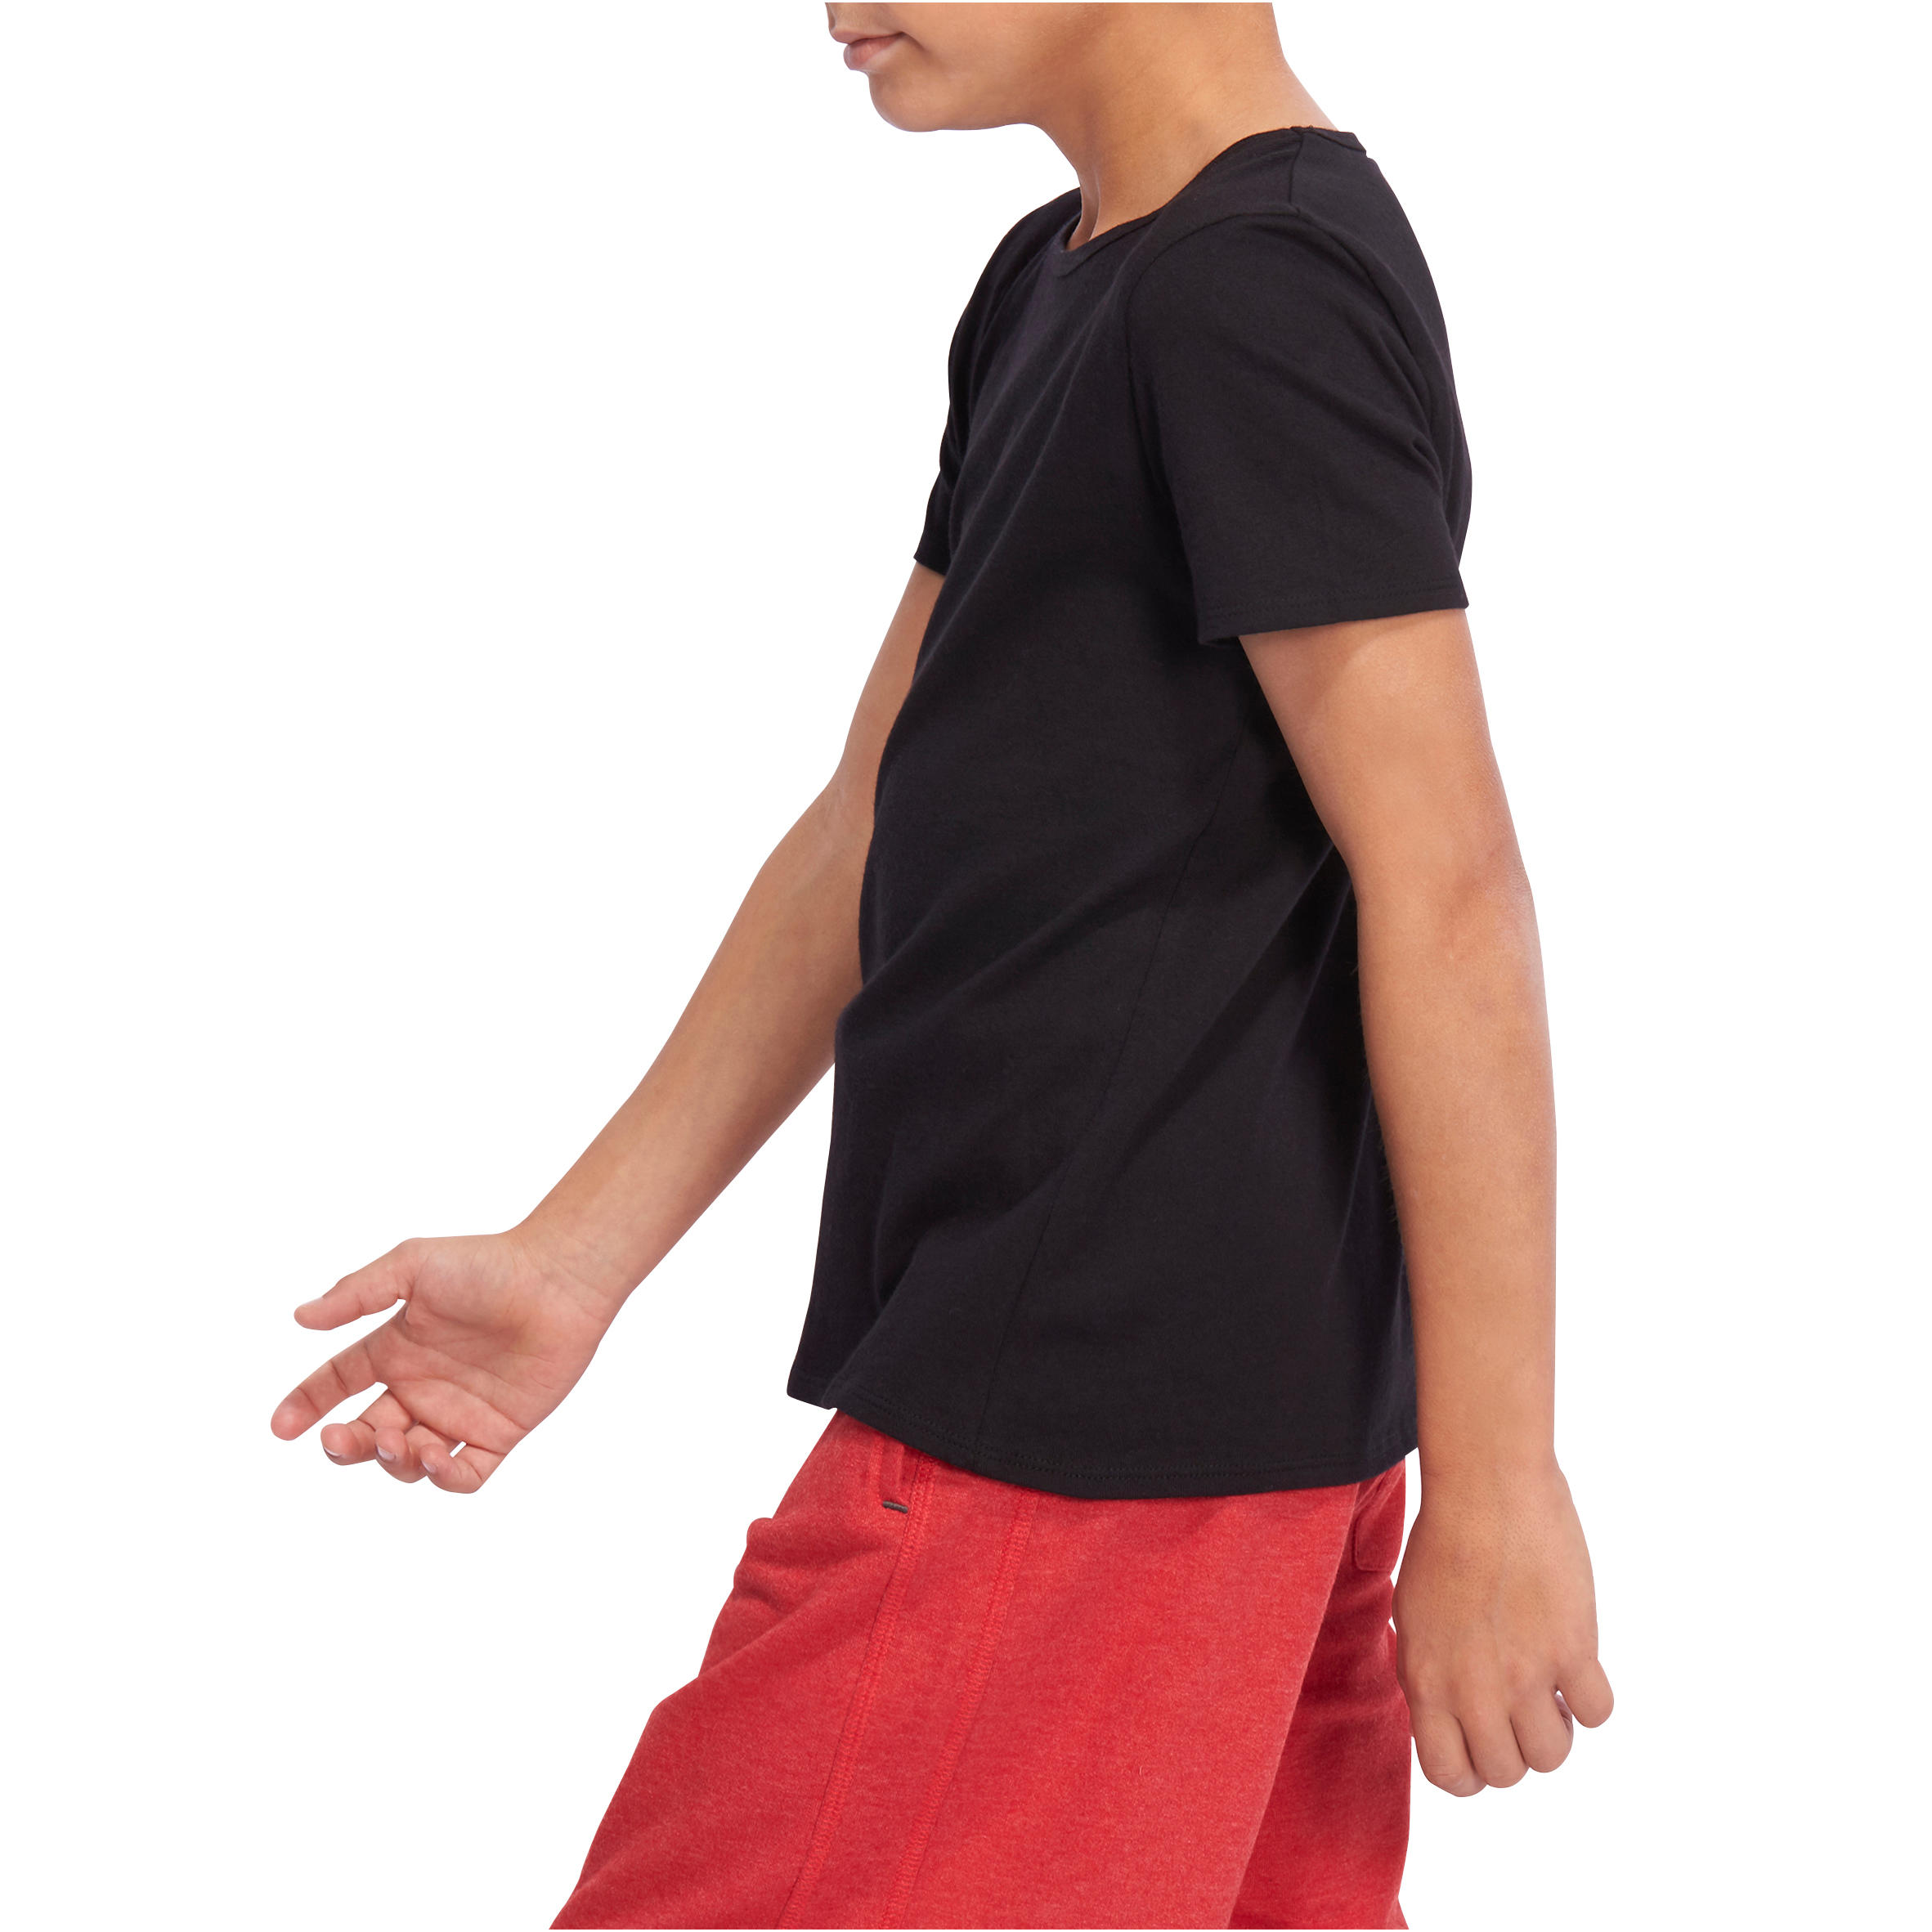 100 Boys' Short-Sleeved Gym T-Shirt - Black 5/8